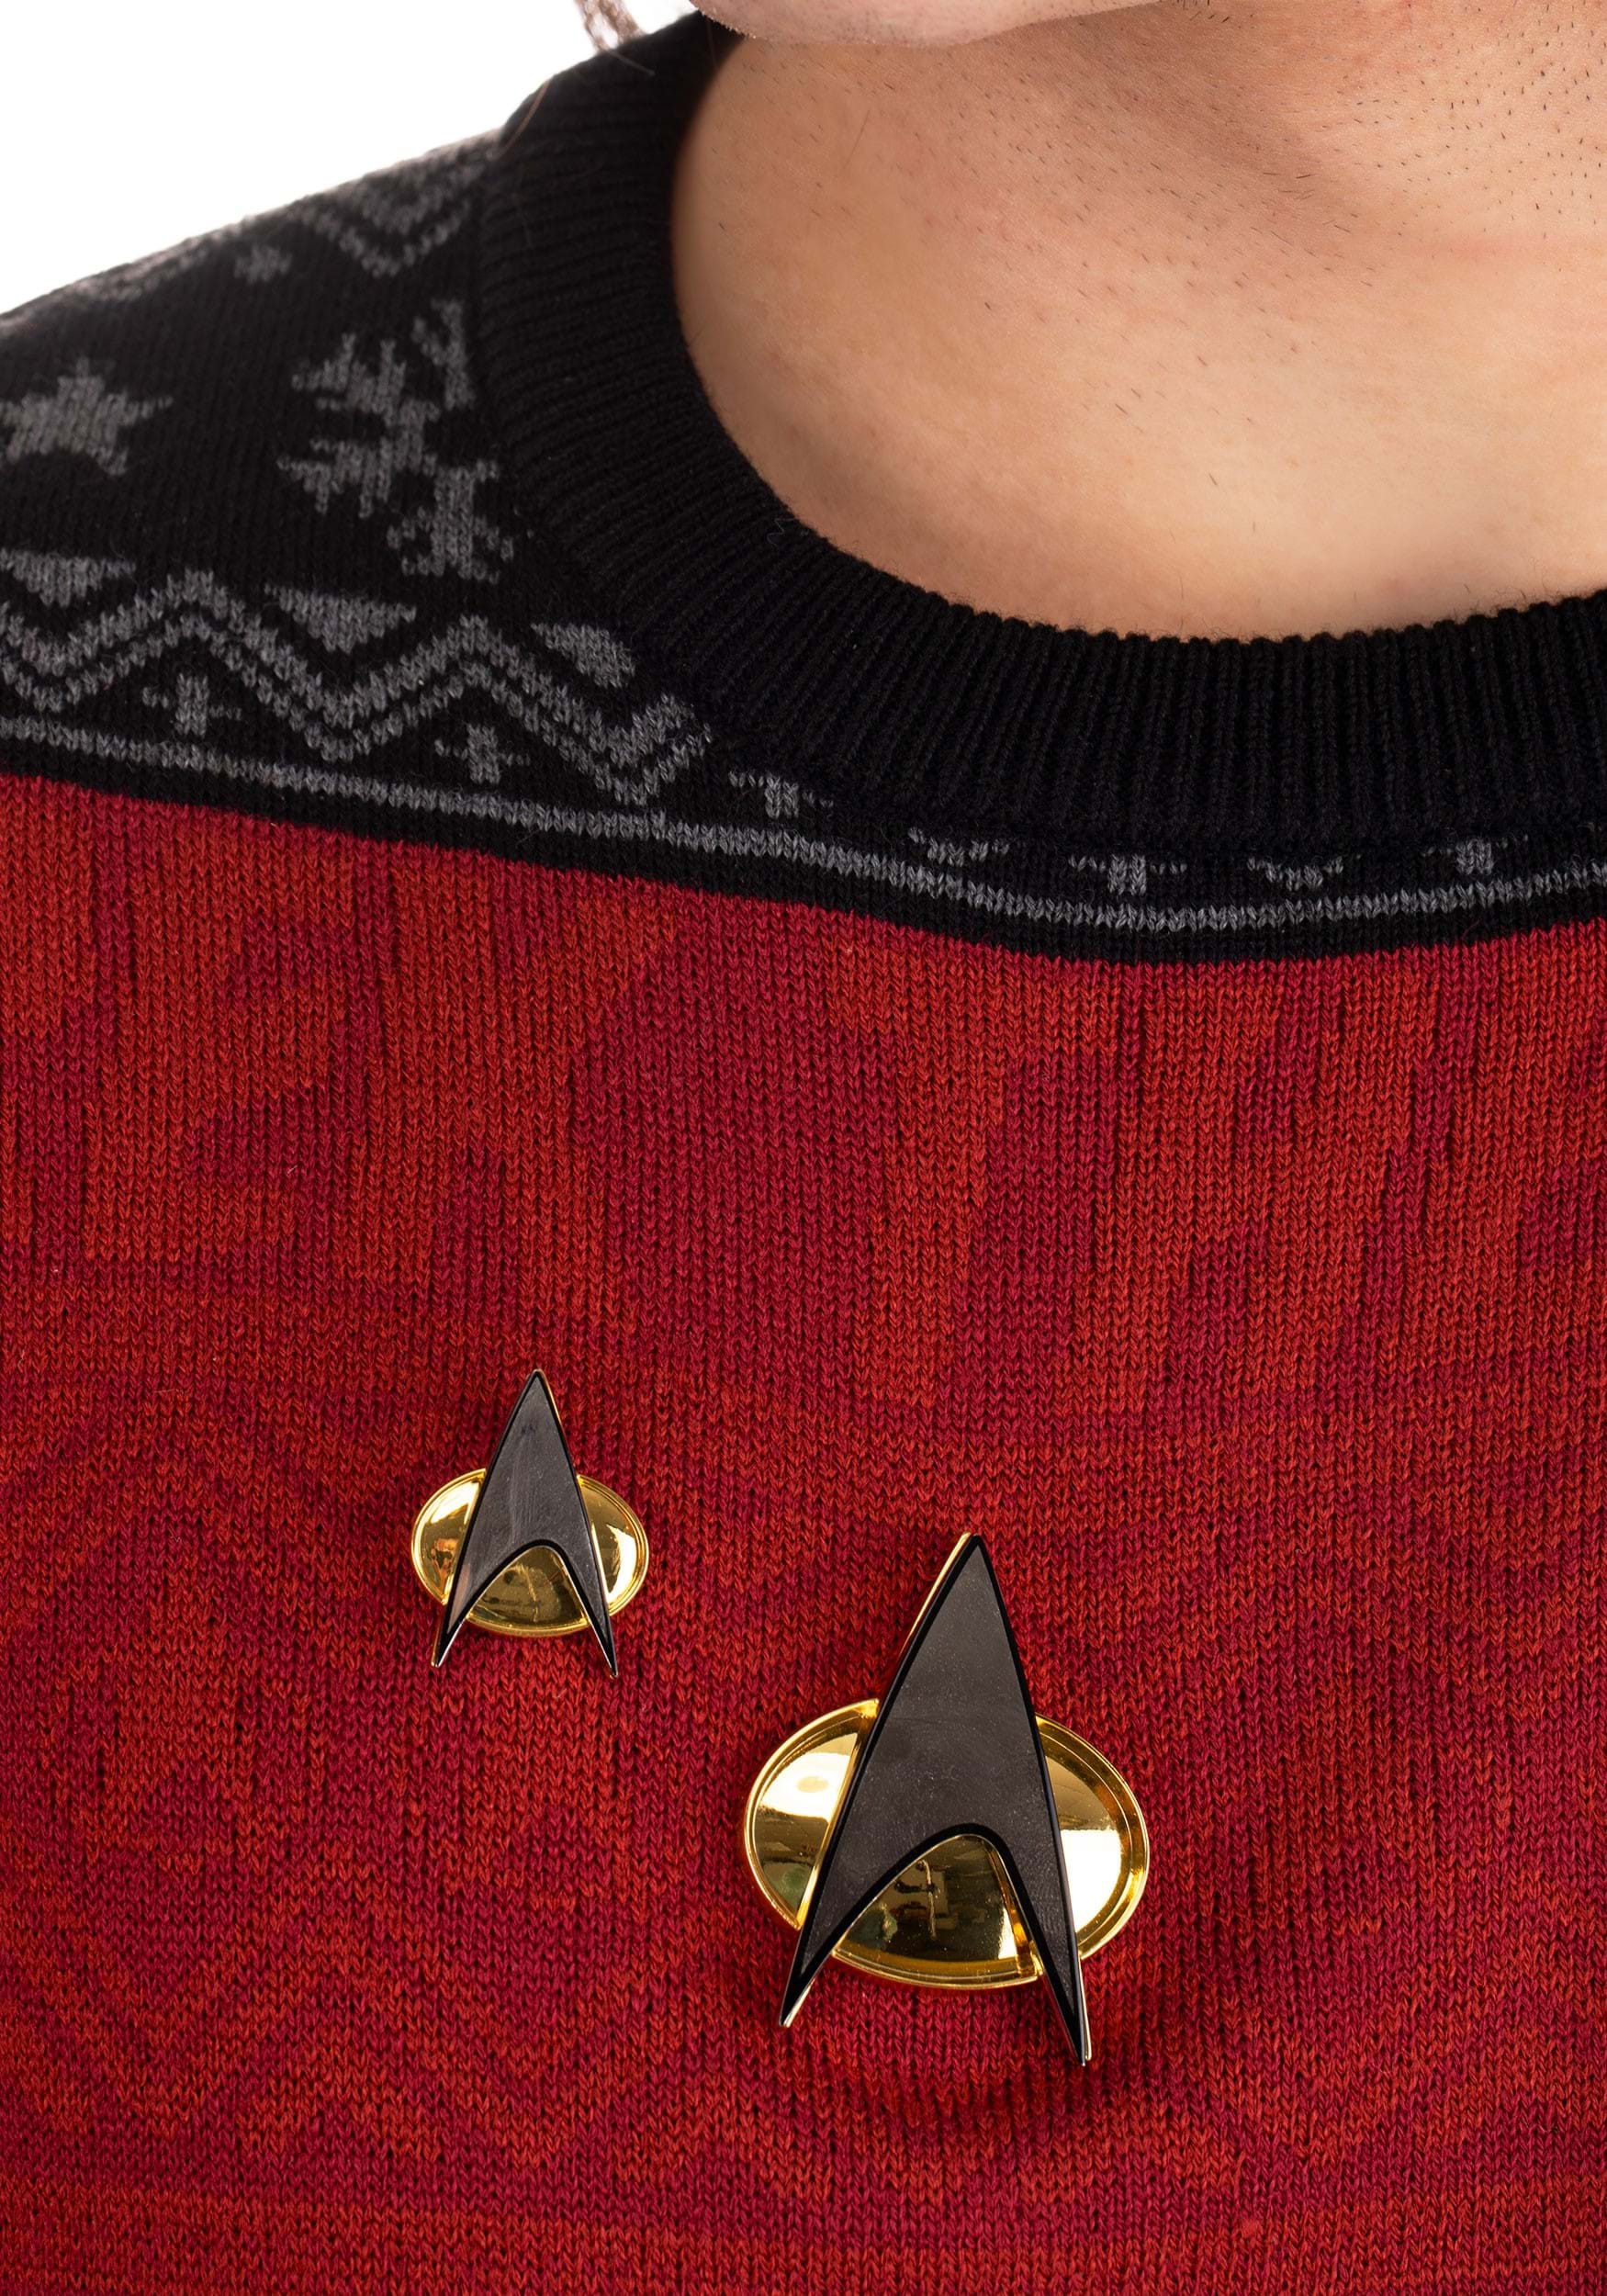 Star Trek The Next Generation Communicator Pin Combadge Captain Future Imperfect 